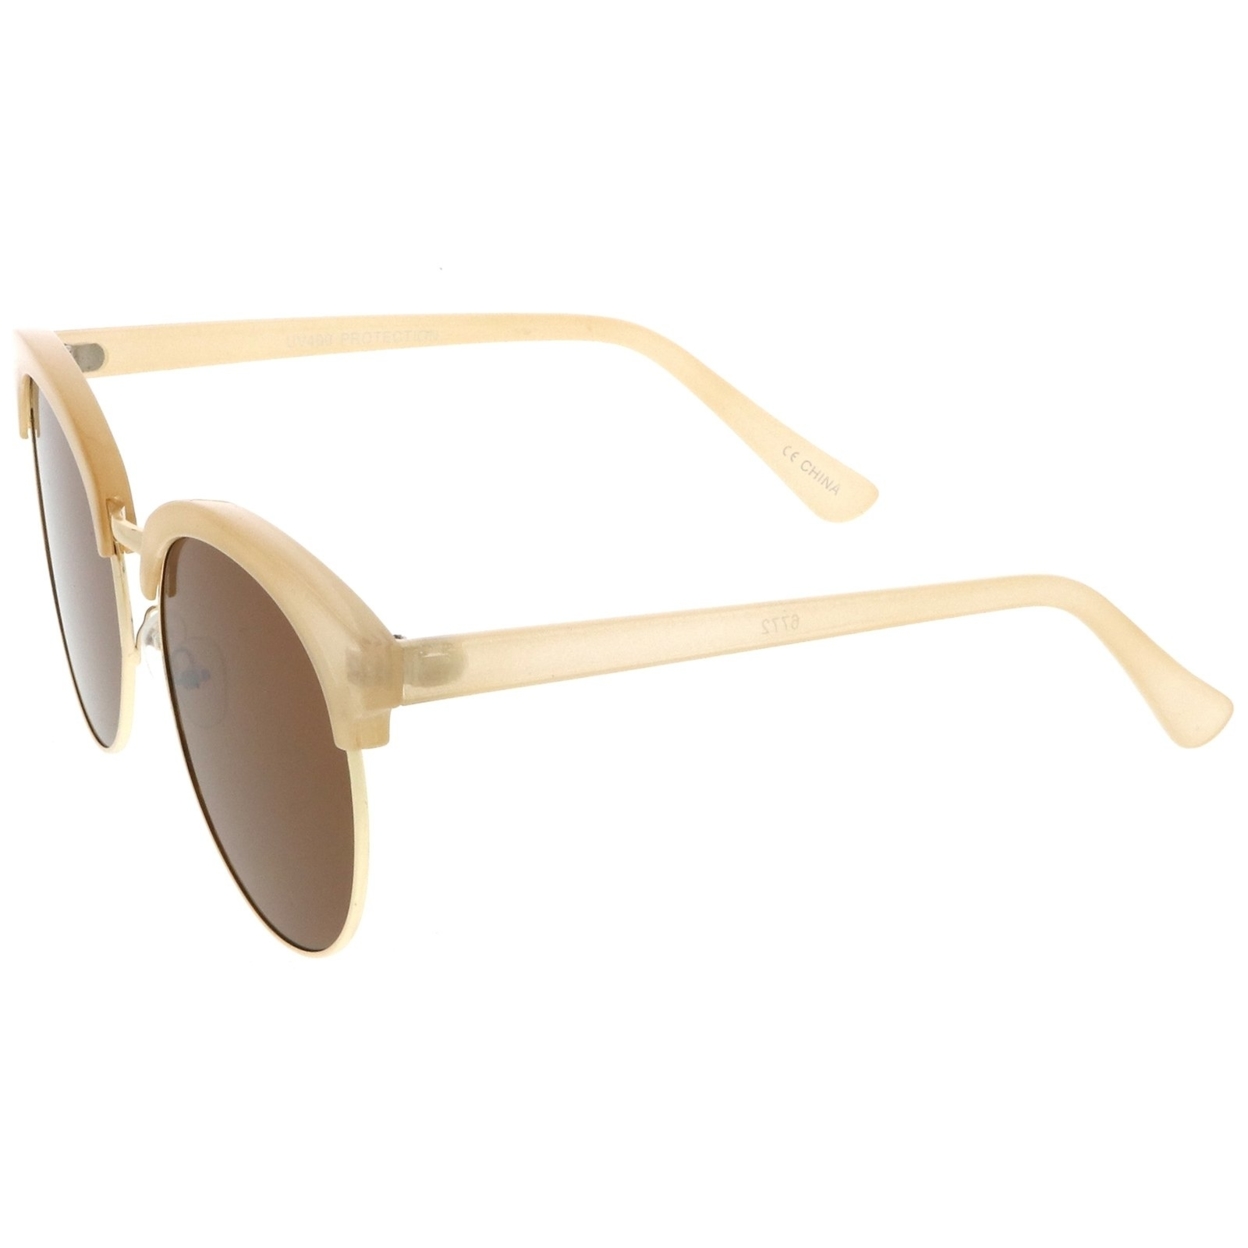 Women's Oversize Half-Frame Circle Flat Lens Round Sunglasses 58mm - Black-Silver / Lavender